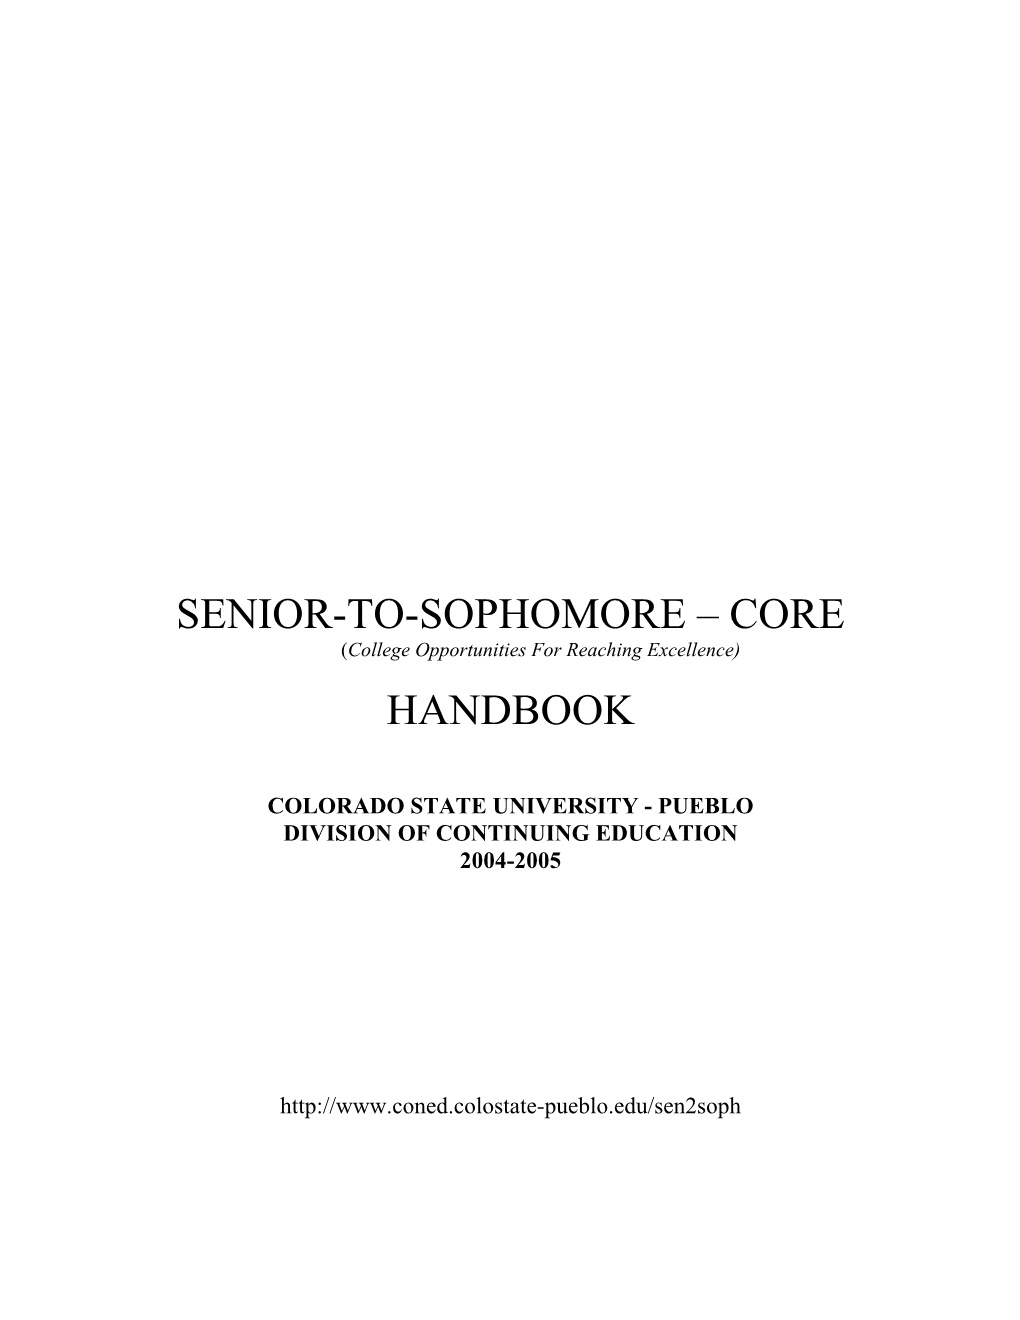 Senior-To-Sophomore – Core Handbook